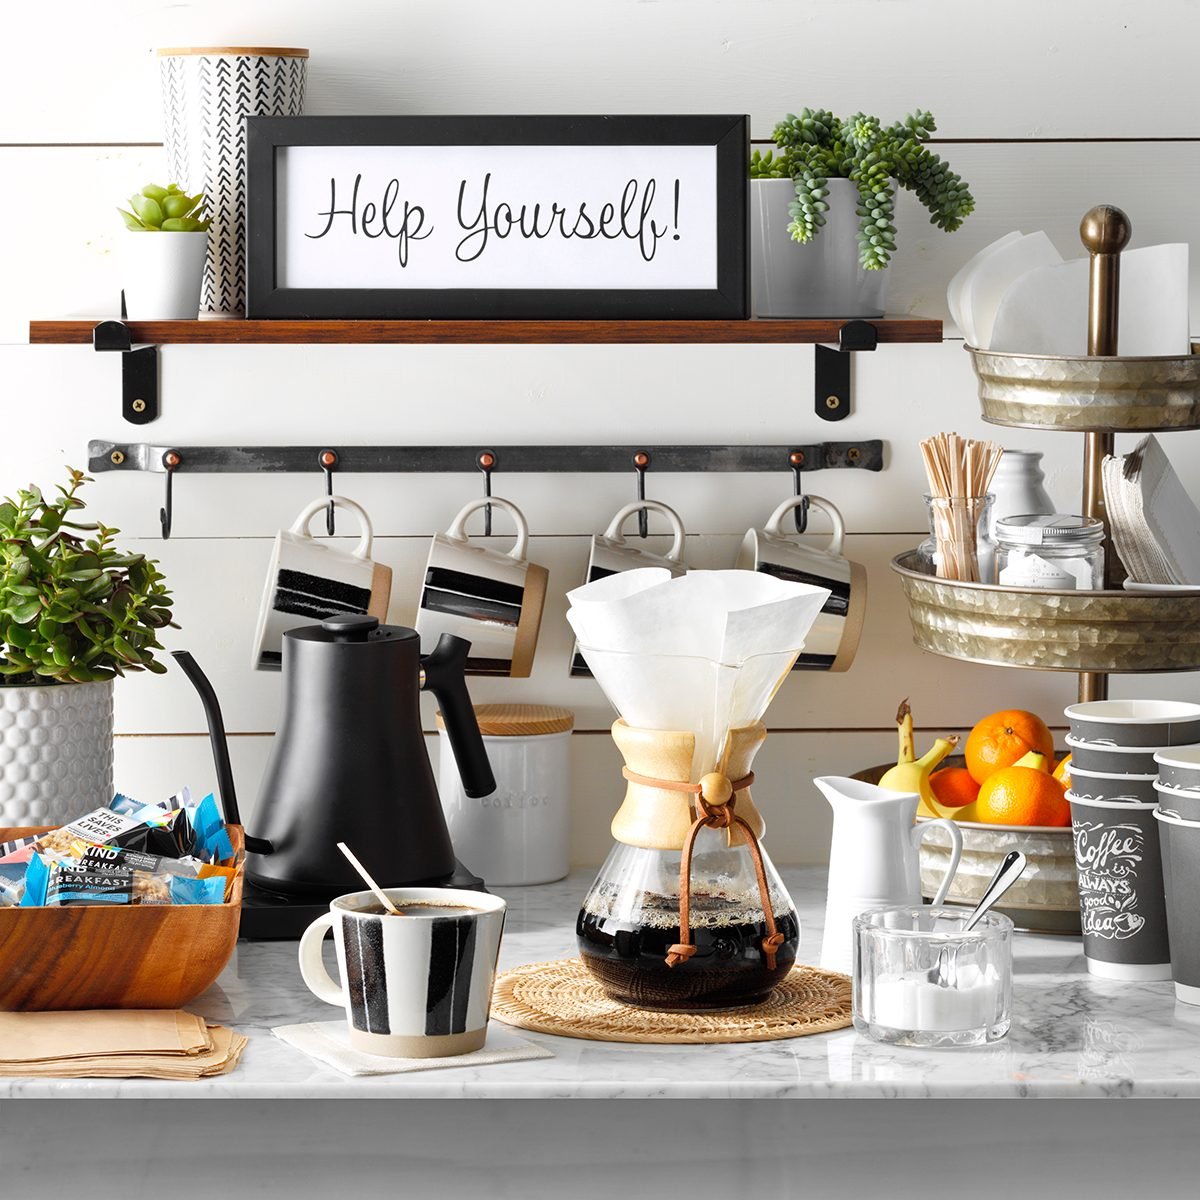 How to Organize Your Coffee Cups - Kitchen Coffee Mug Organization Ideas